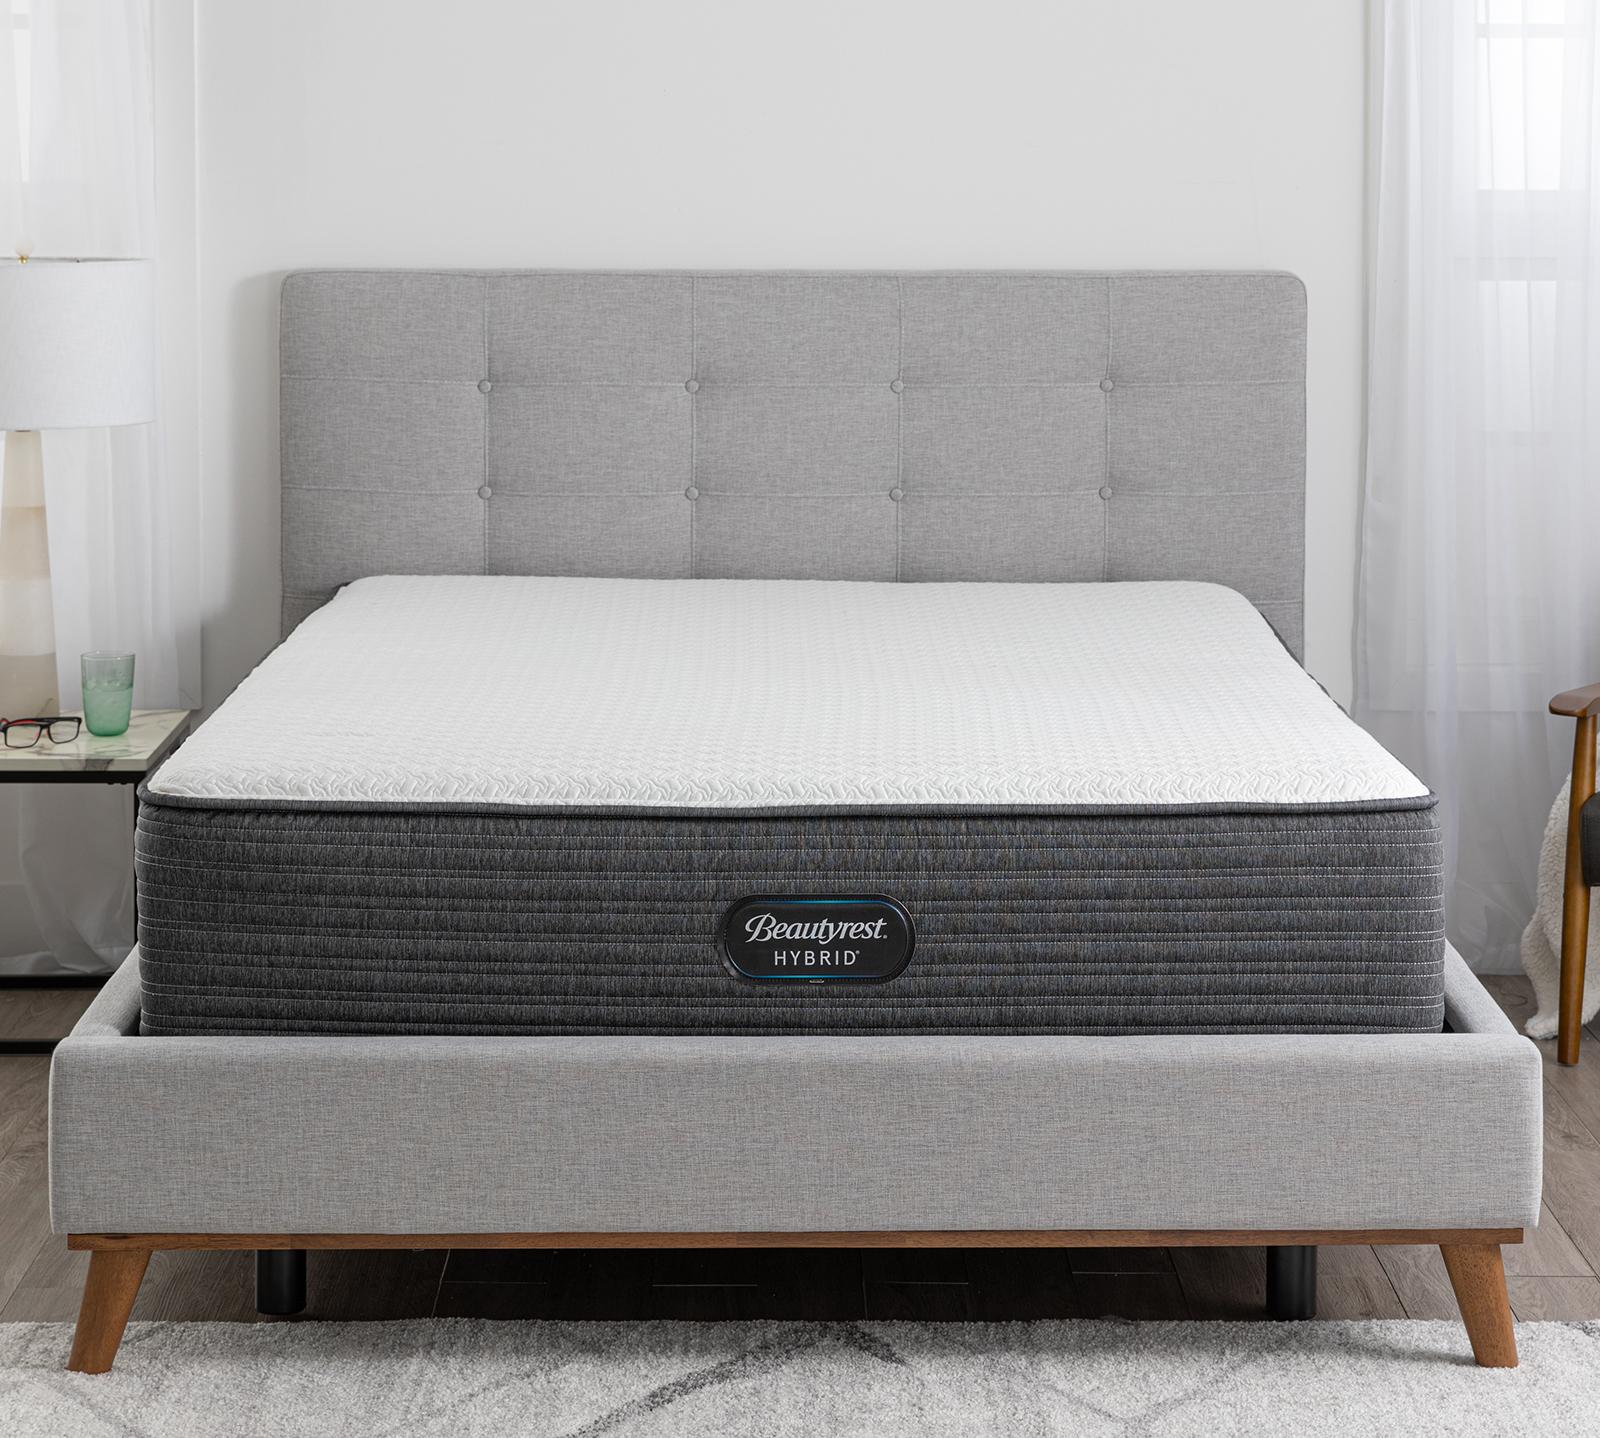 Beautyrest Hybrid Mattress Review 2021, Beautyrest Premium Bed S Bed Frame